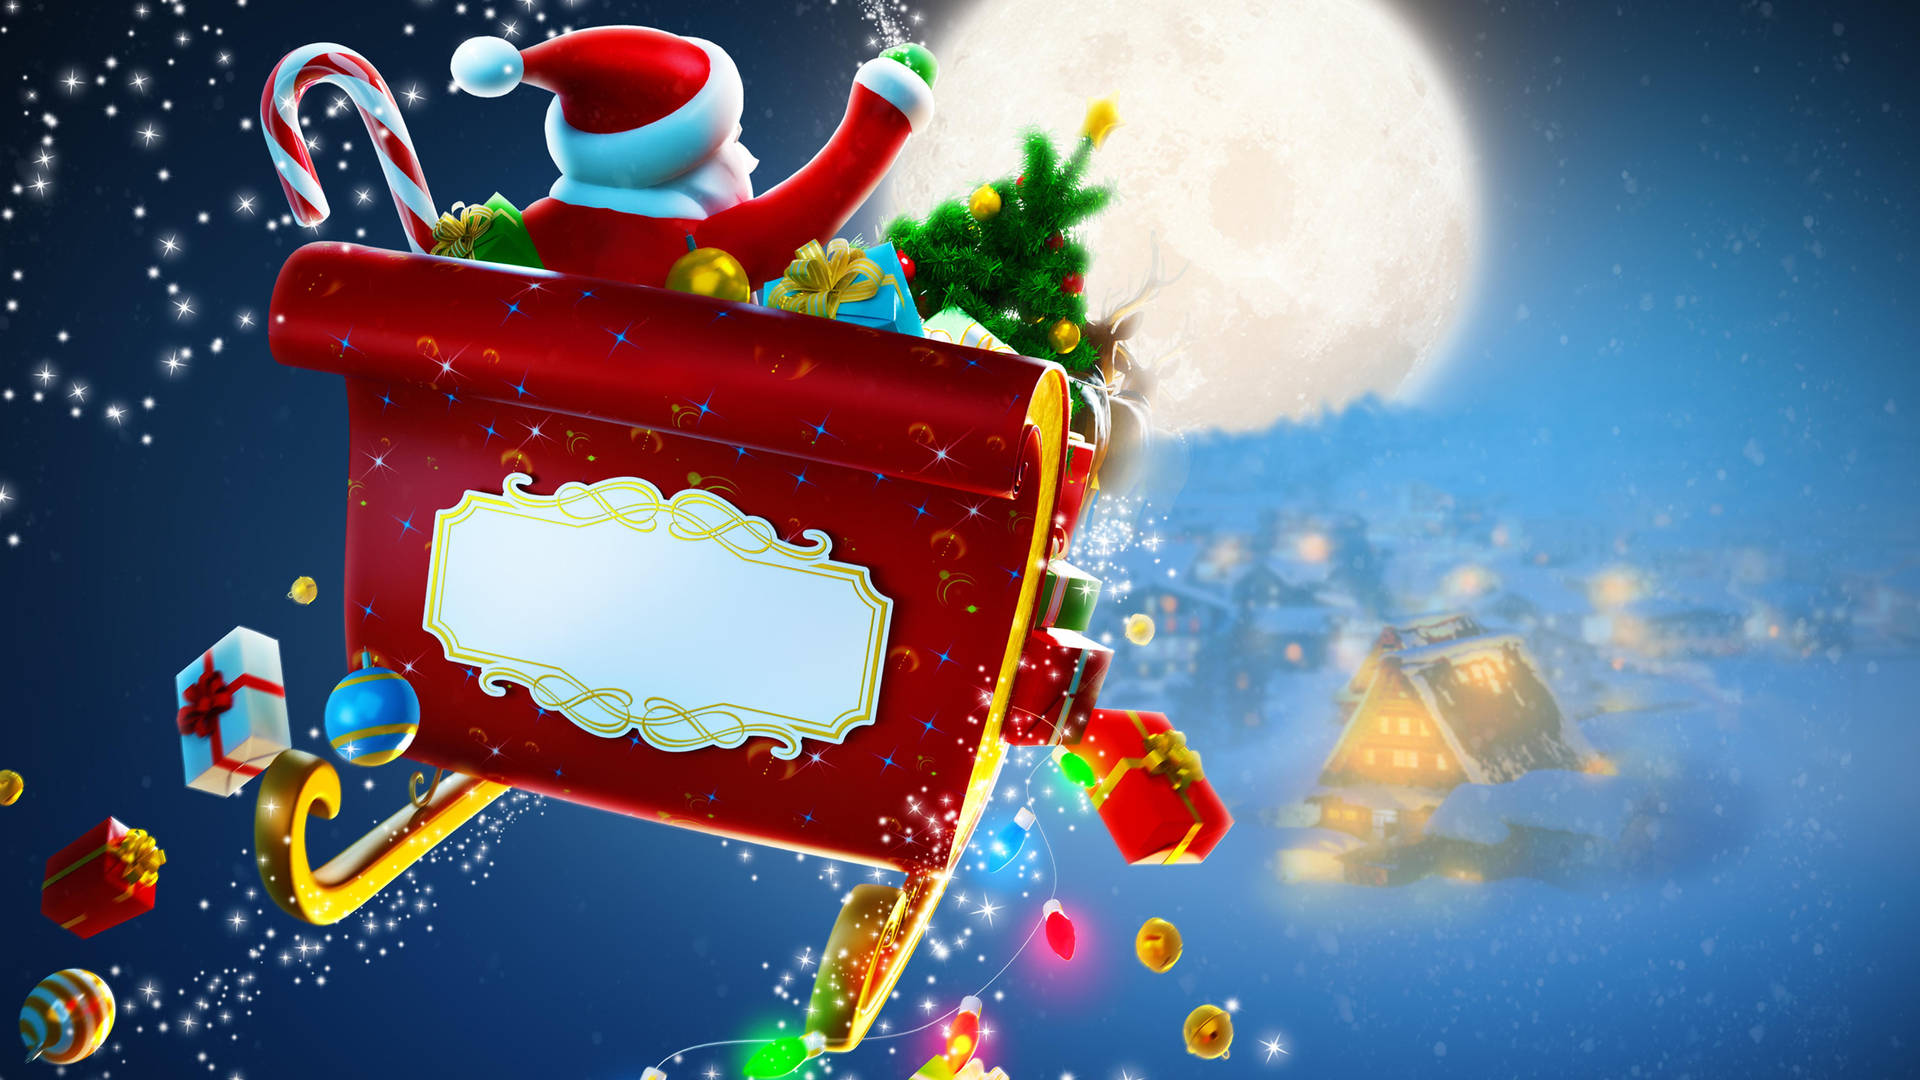 Santa Claus Digital Art Background